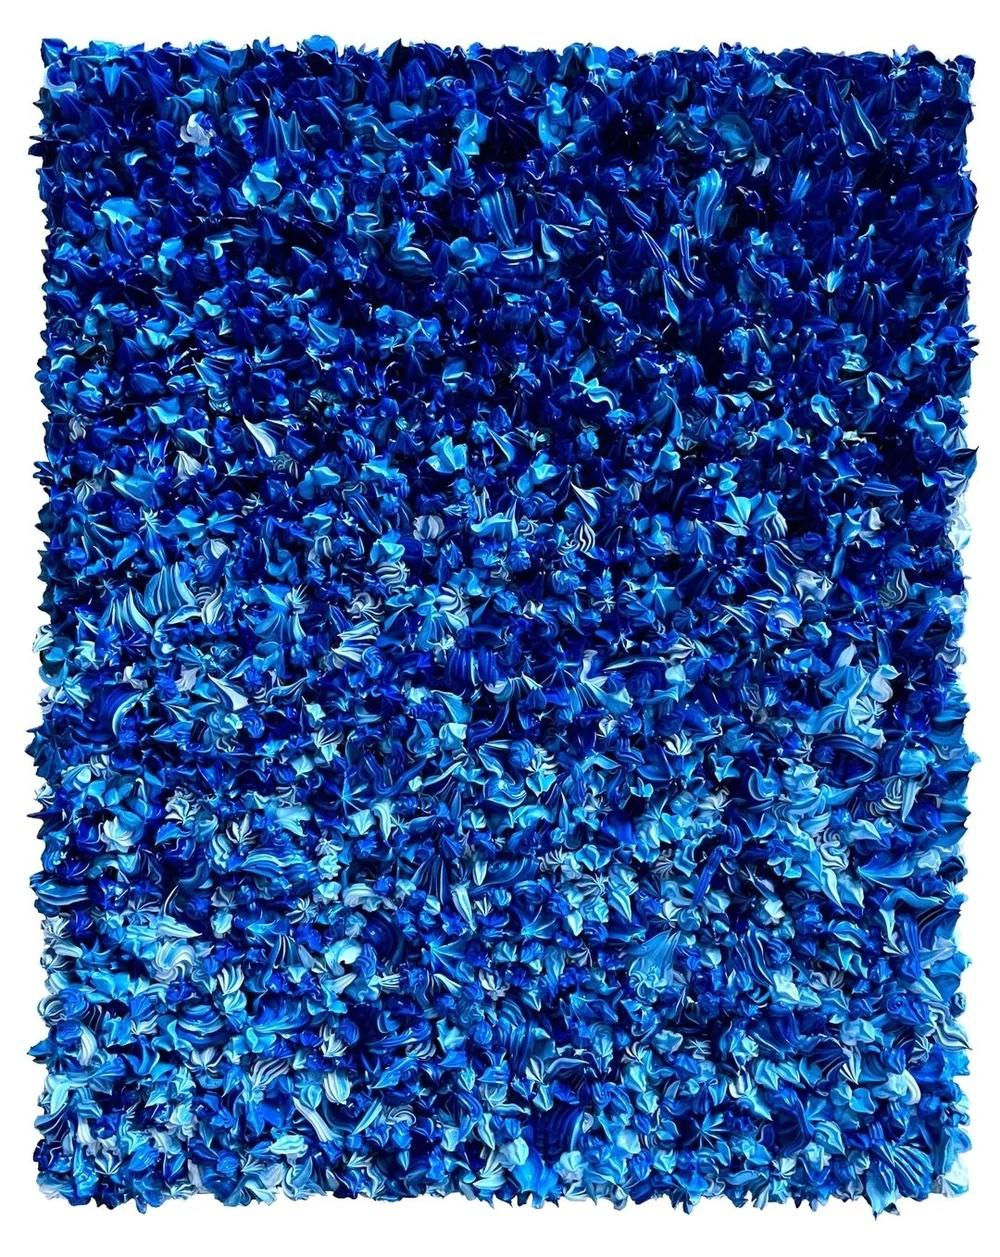 50 Shades of Blue - Mixed Media Art by christophe sola